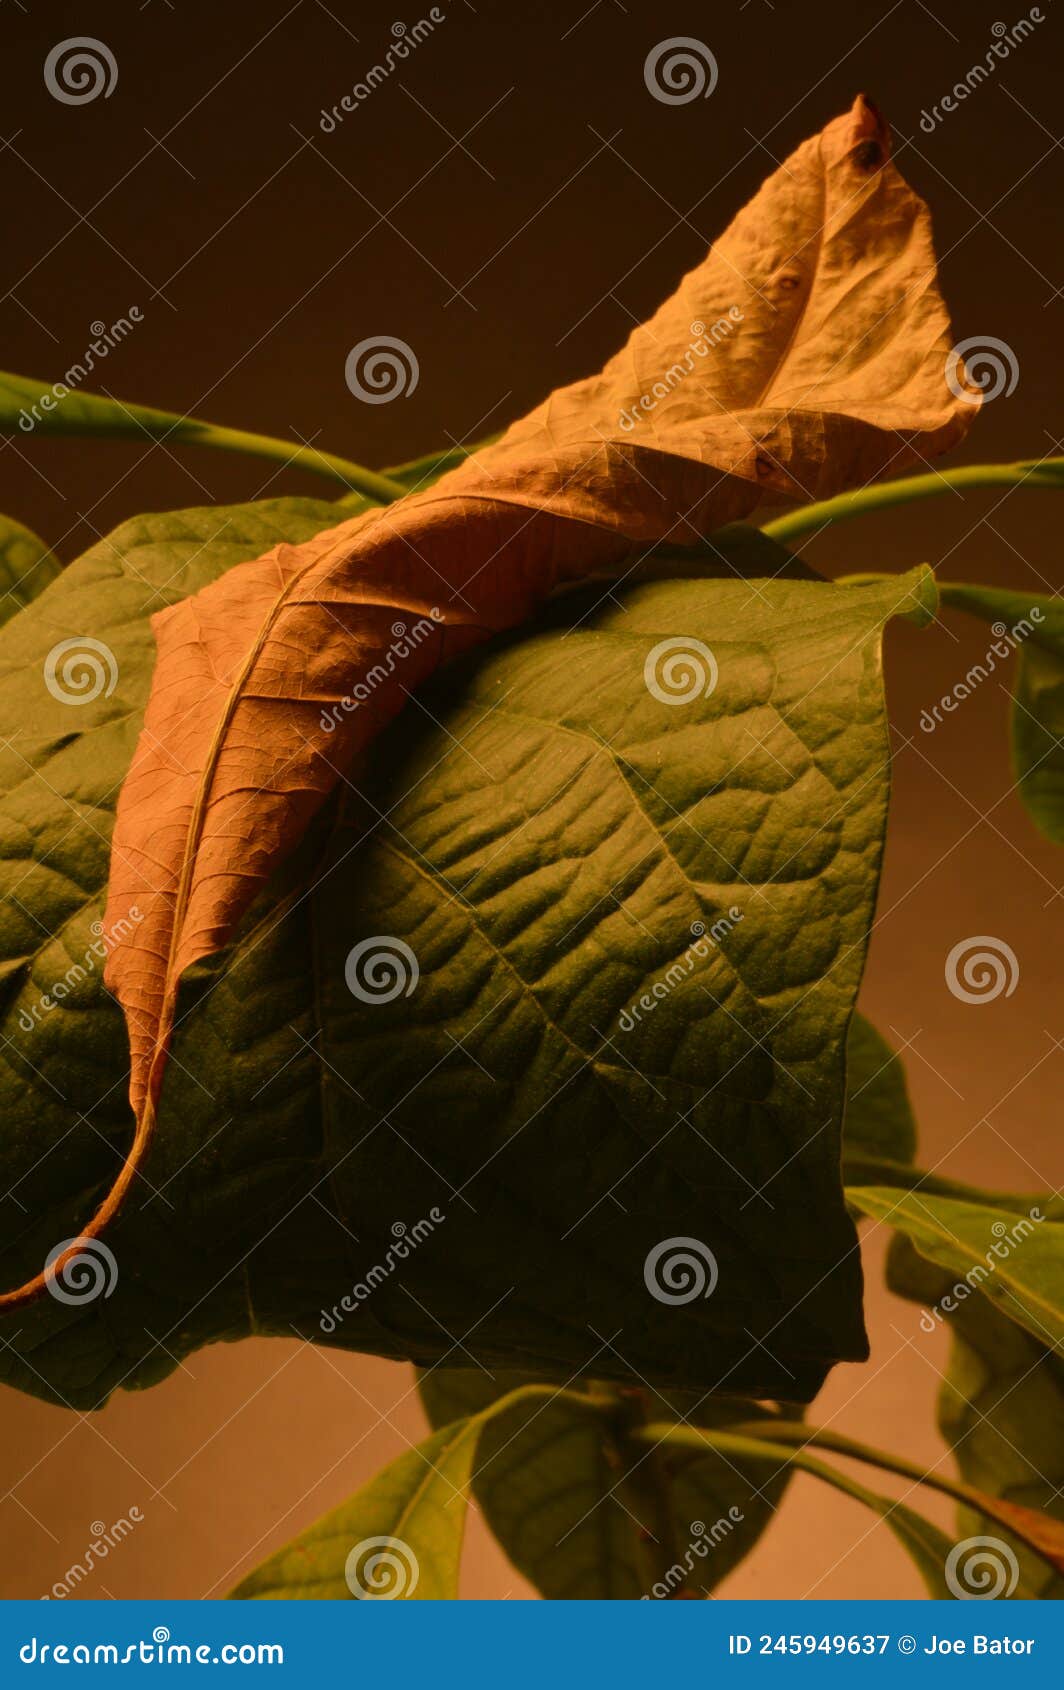 fallen avocado leaf resting on a living plant